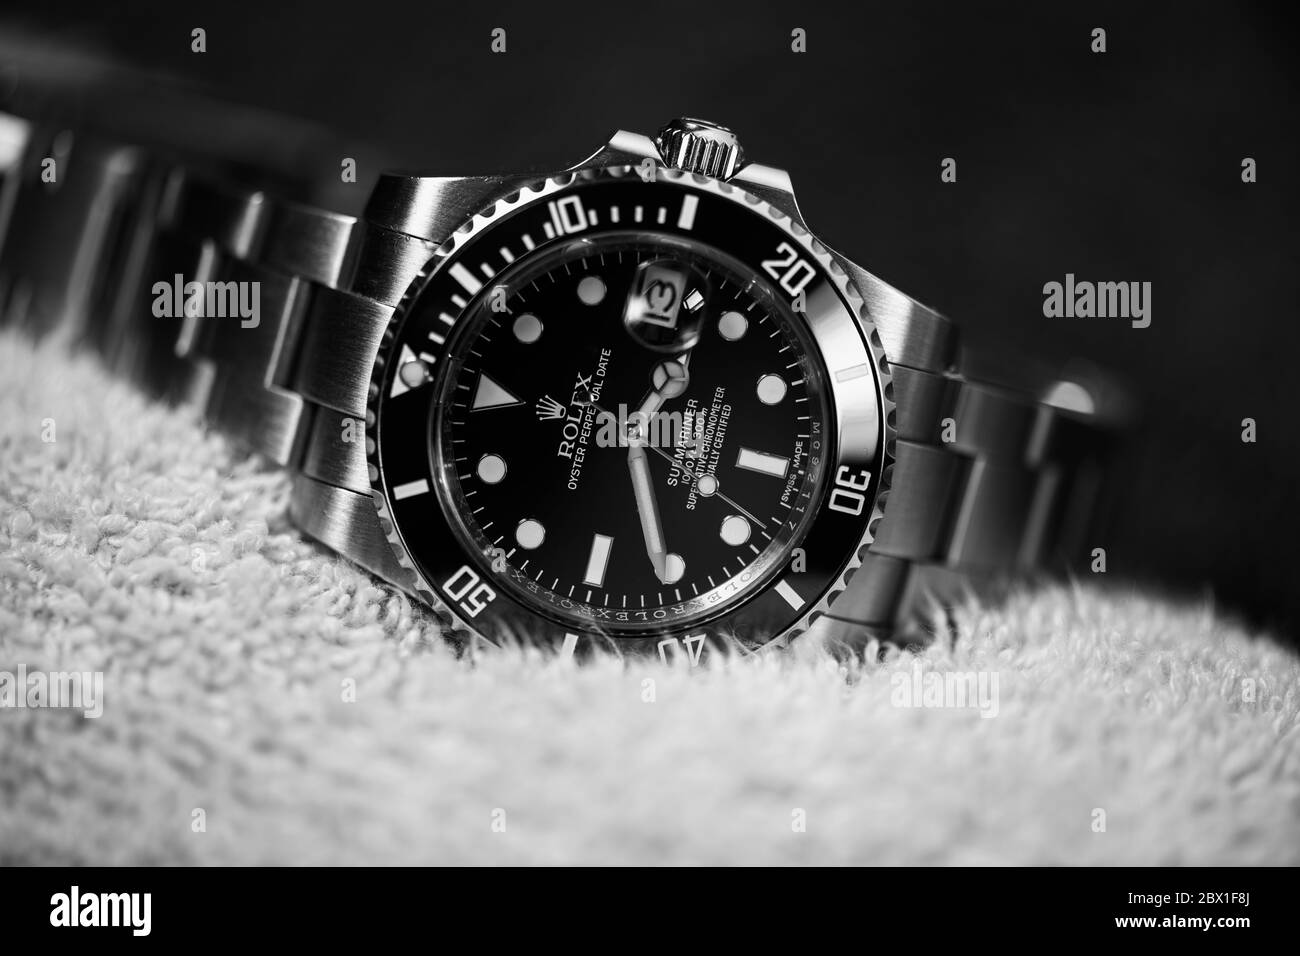 Rolex Submariner Steel Black Ceramic Herren Armbanduhr Stockfoto